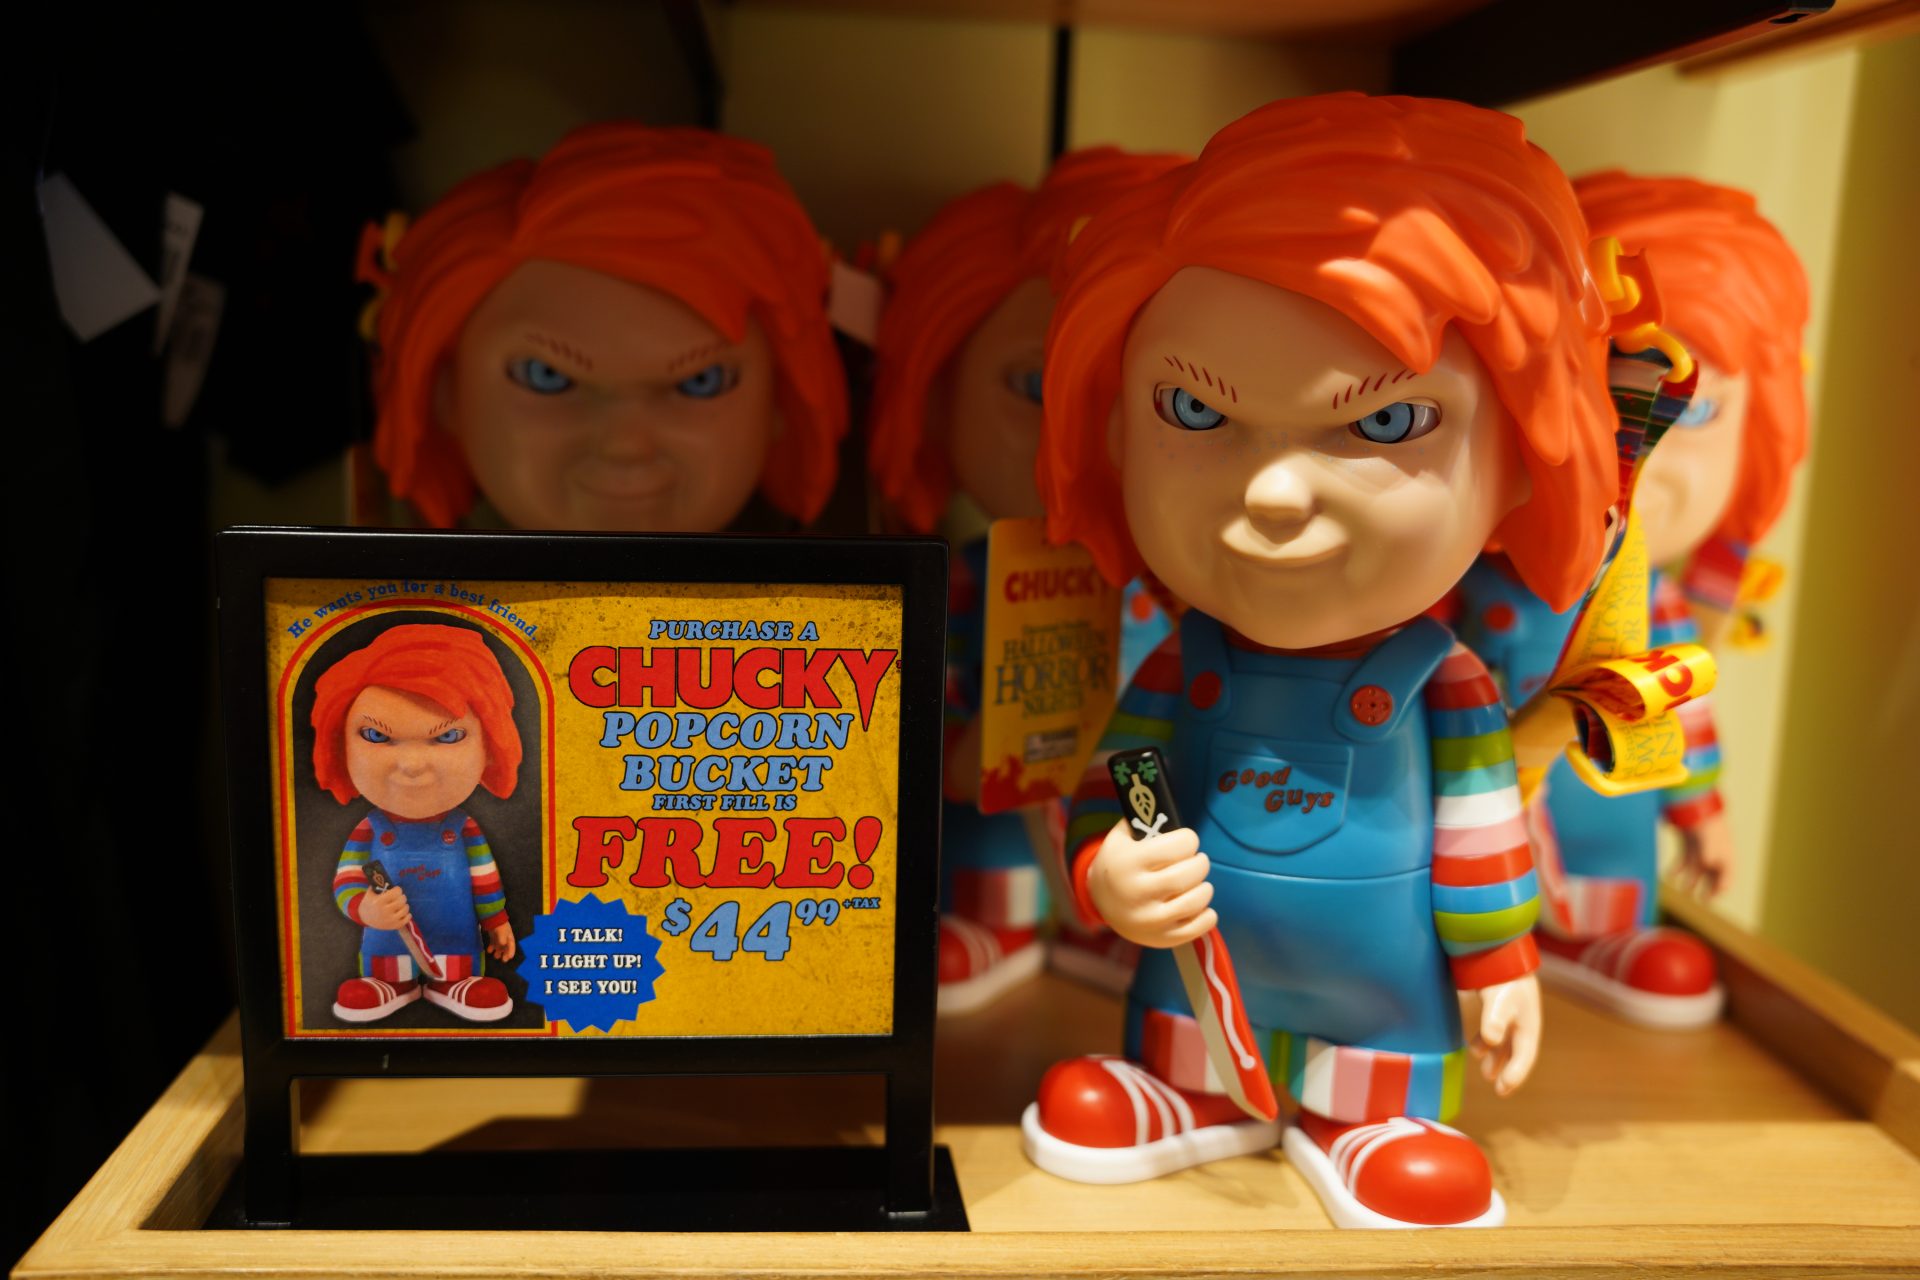 Interactive Chucky Popcorn Bucket available at Universal Orlando